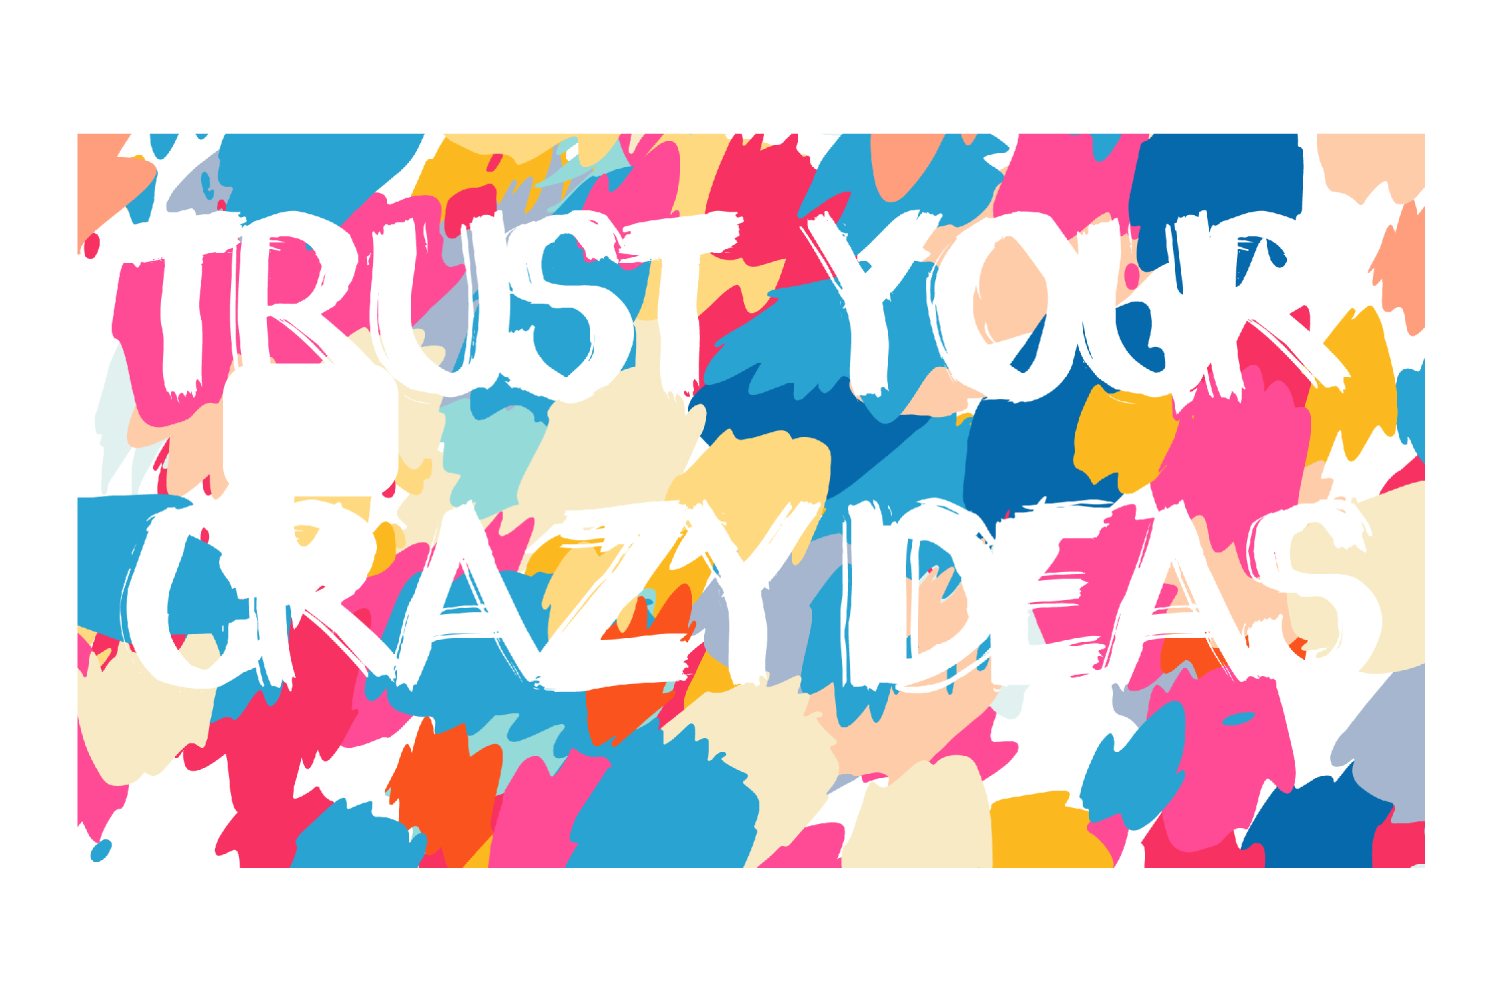 Trust Your Crazy Ideas